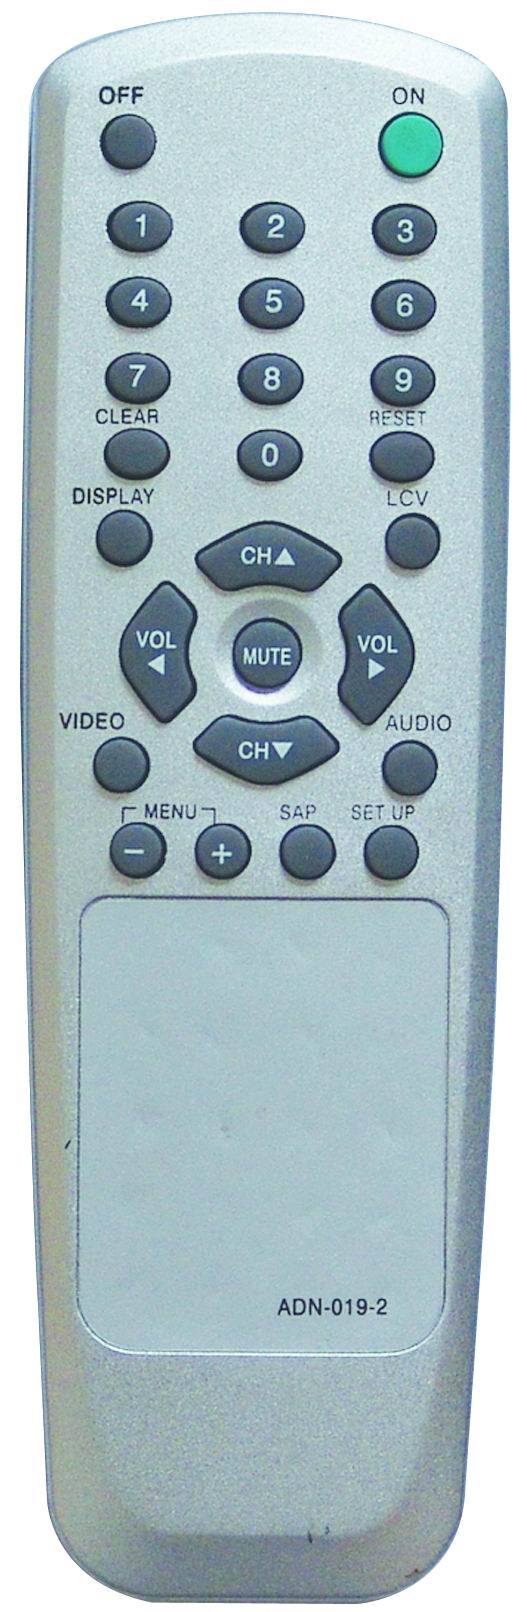 Kr-045 Universal Remote Control